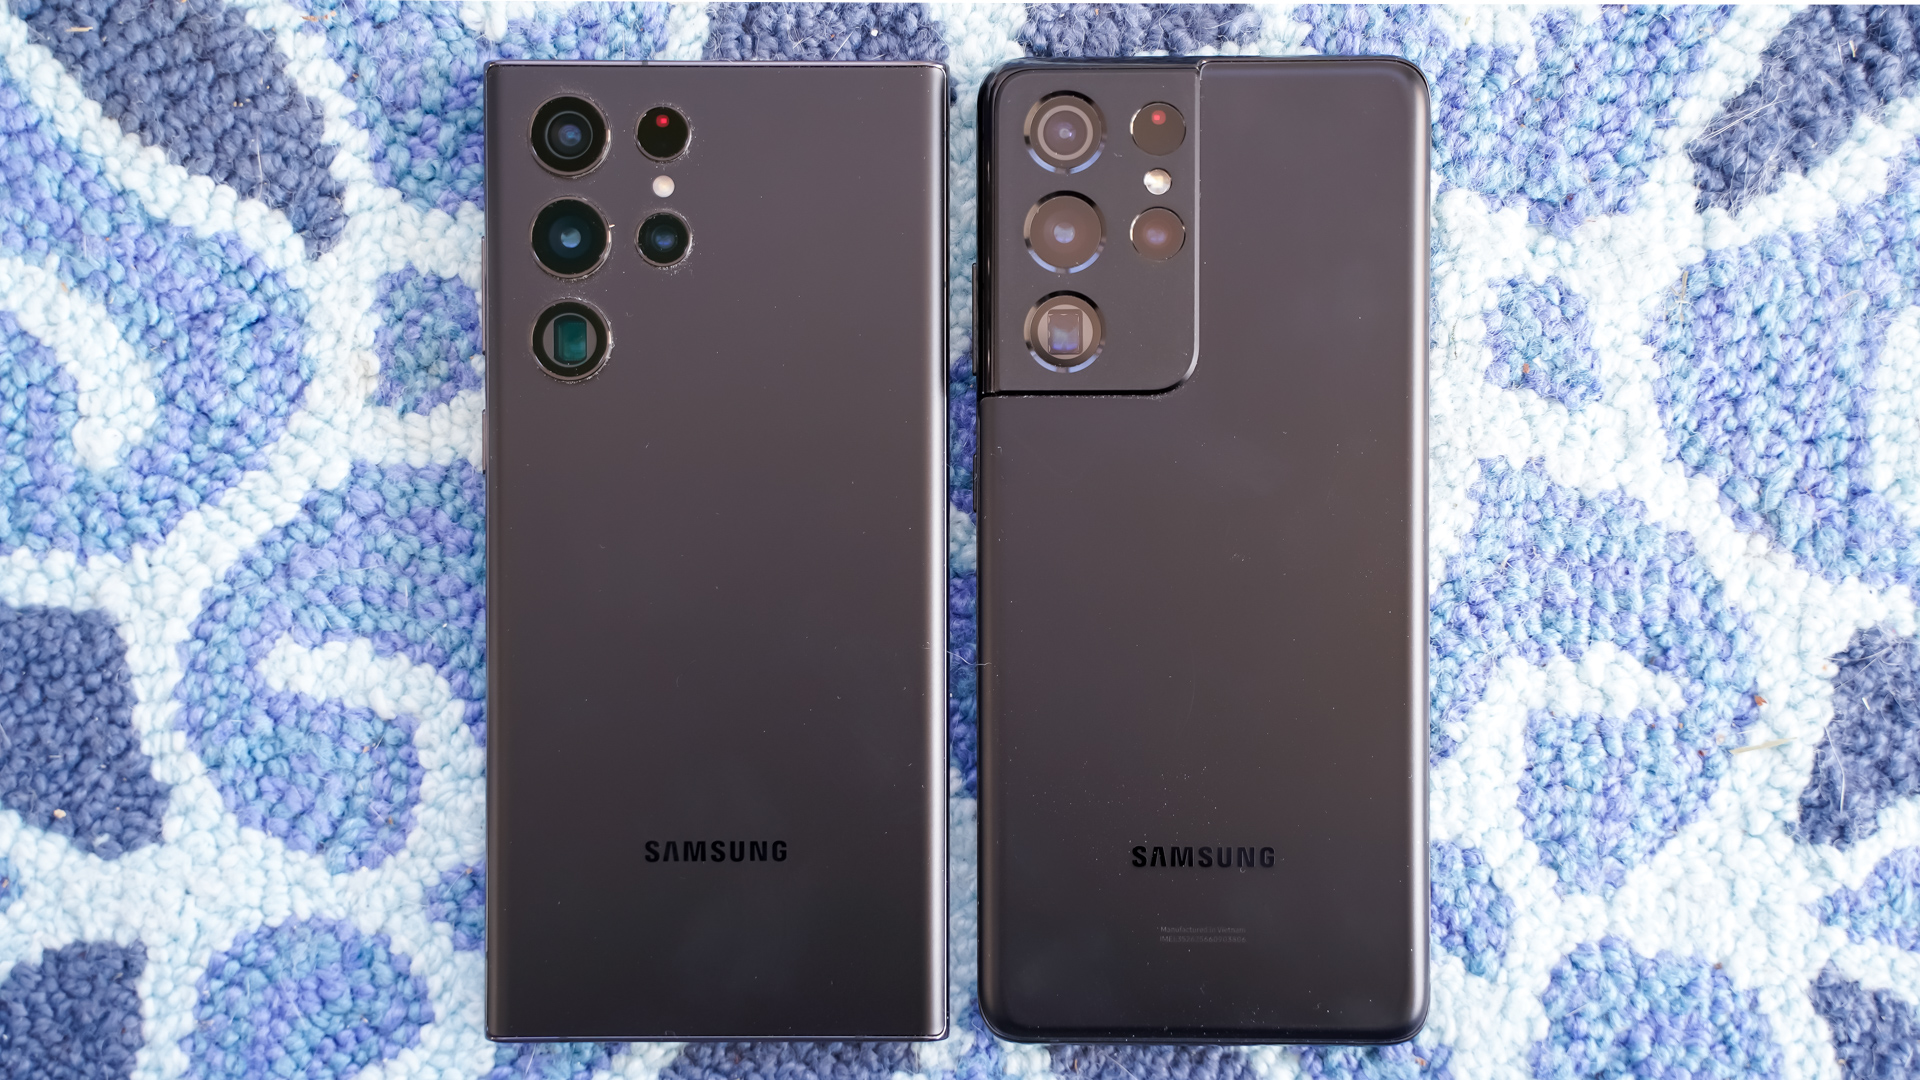 Samsung galaxy s22 ultra black vs samsung galaxy s21 ultra black rear on carpet